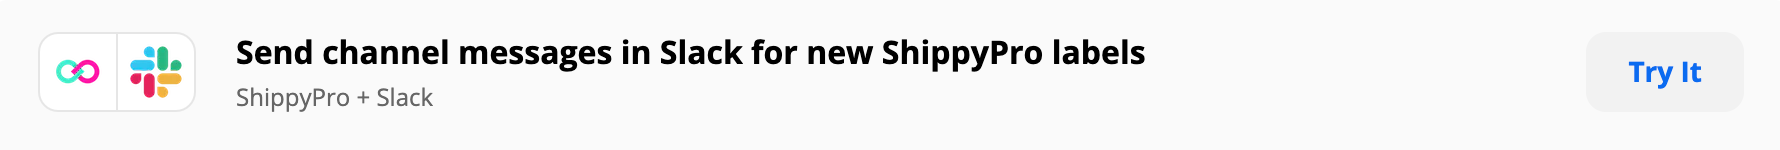 Send channel messages in Slack for new ShippyPro Labels 